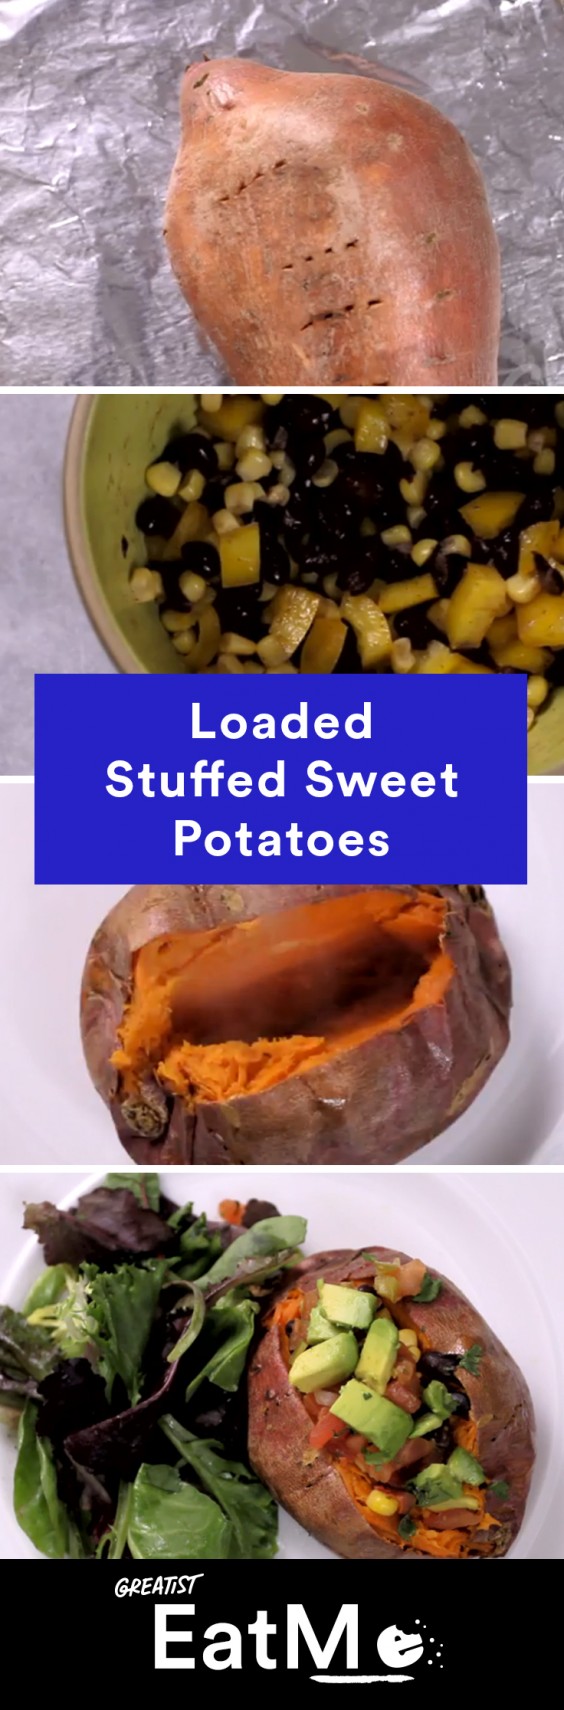 Eat Me Video: Stuffed Sweet Potatoes